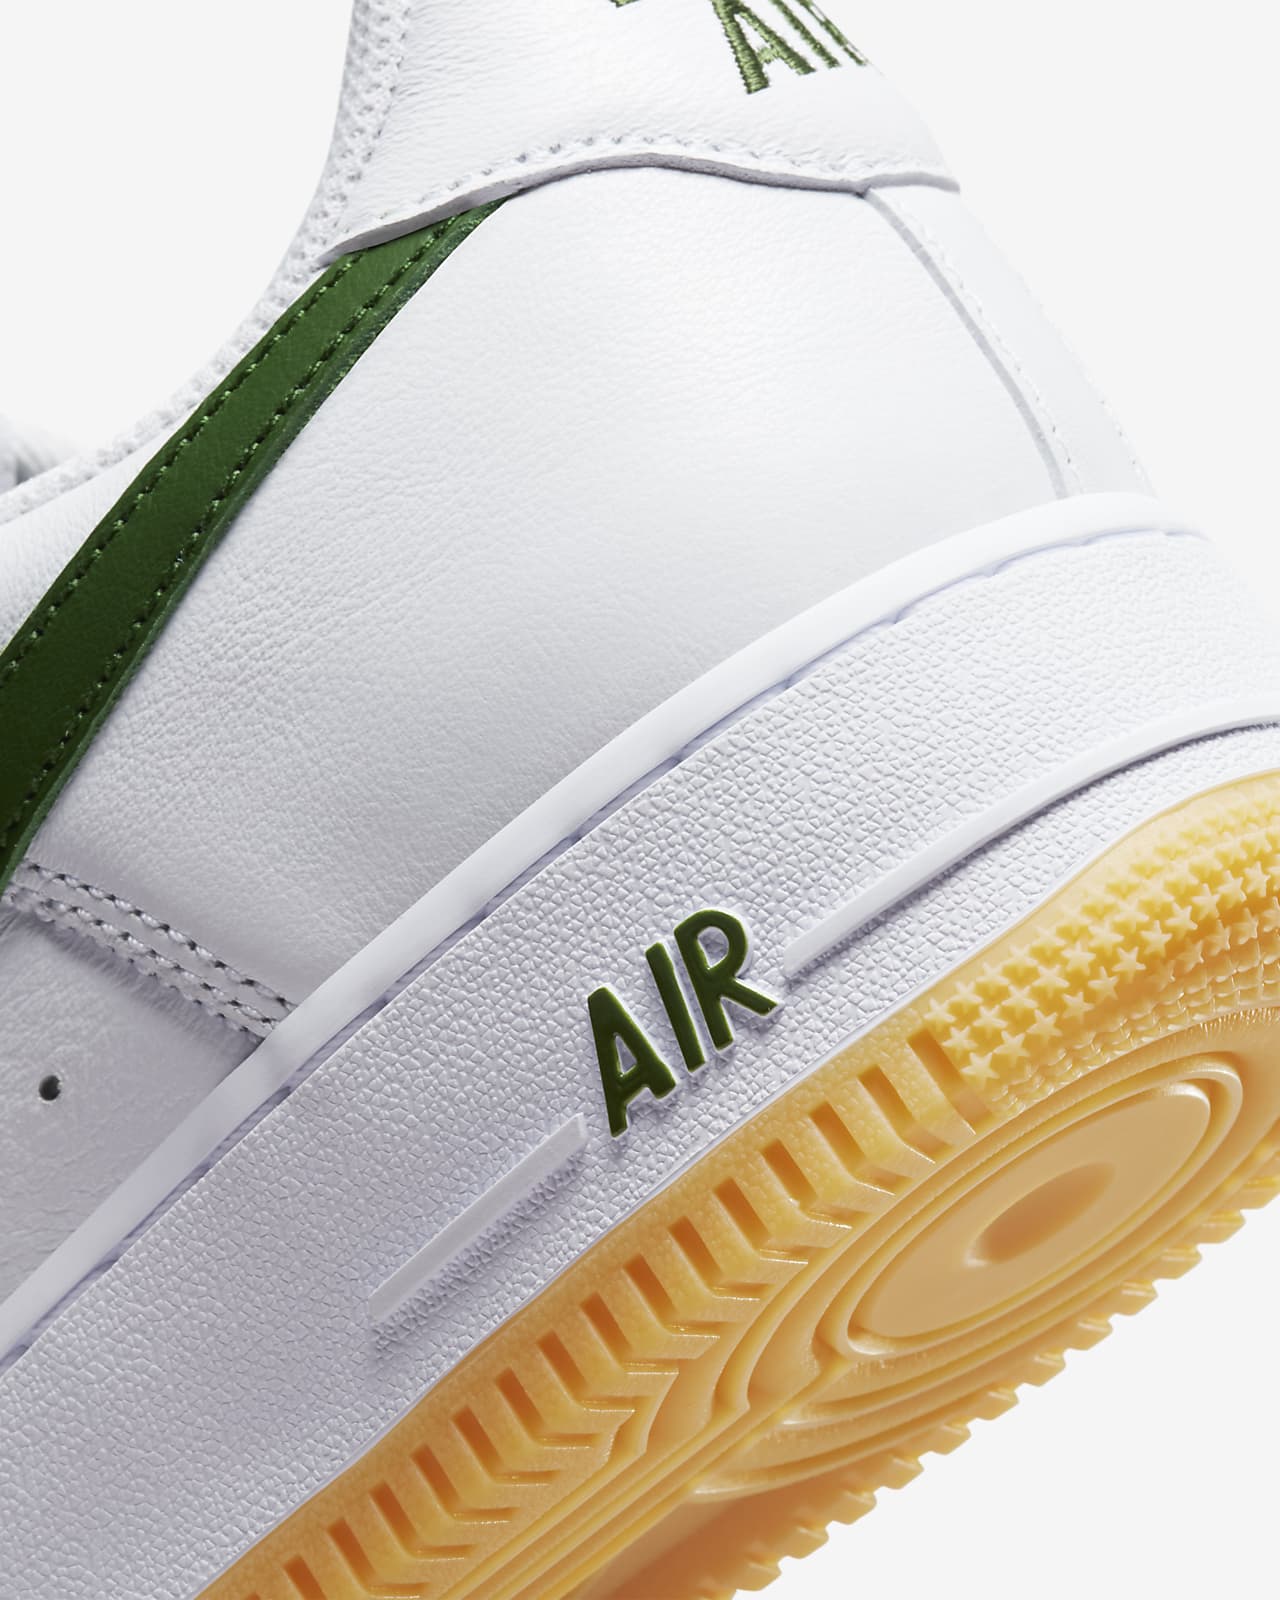 Green Air Force 1 Shoes. Nike CA